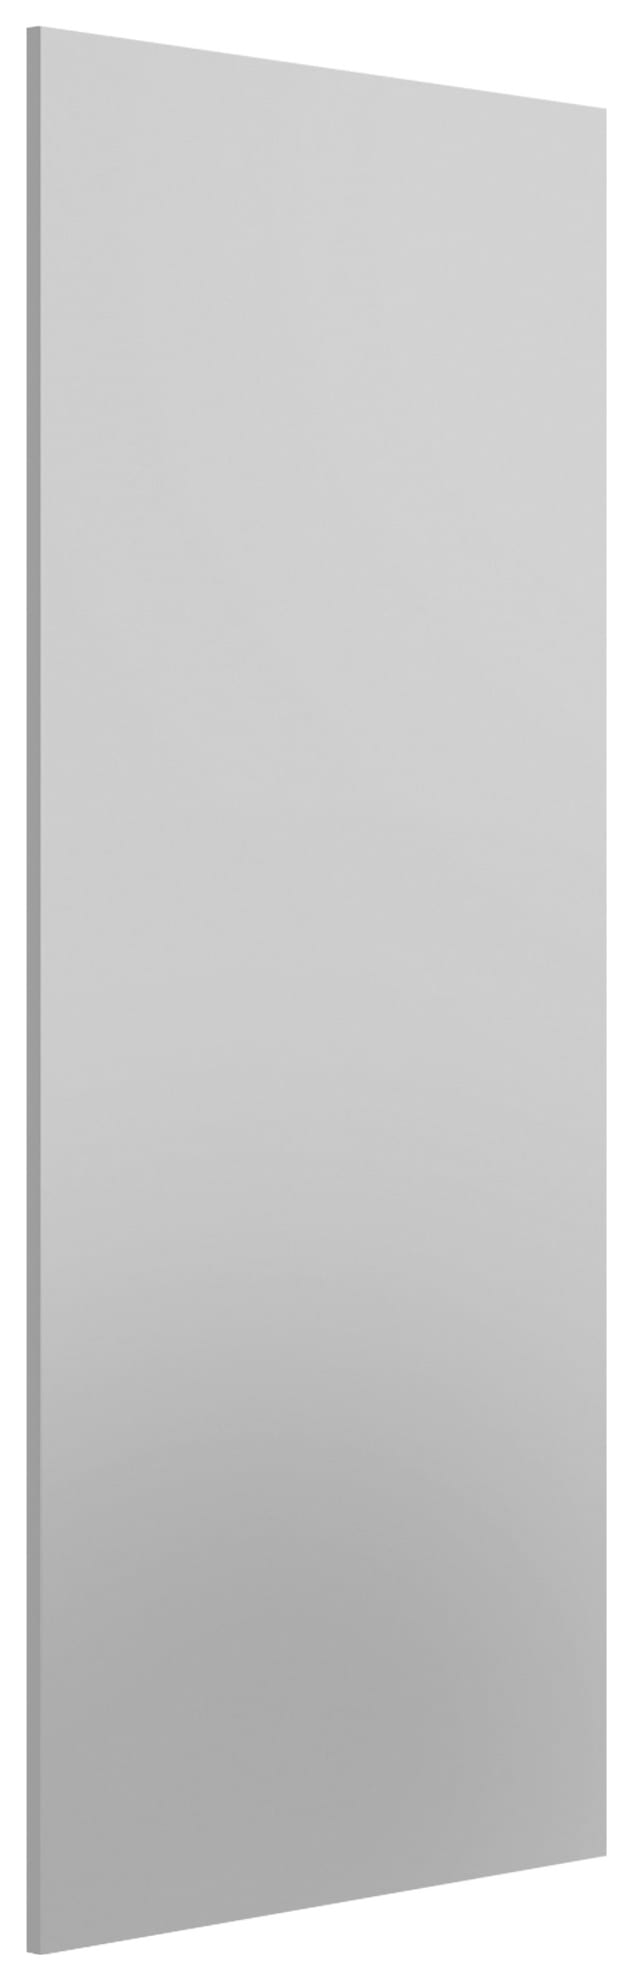 Spacepro Wardrobe End Panel Dove Grey - 2800mm